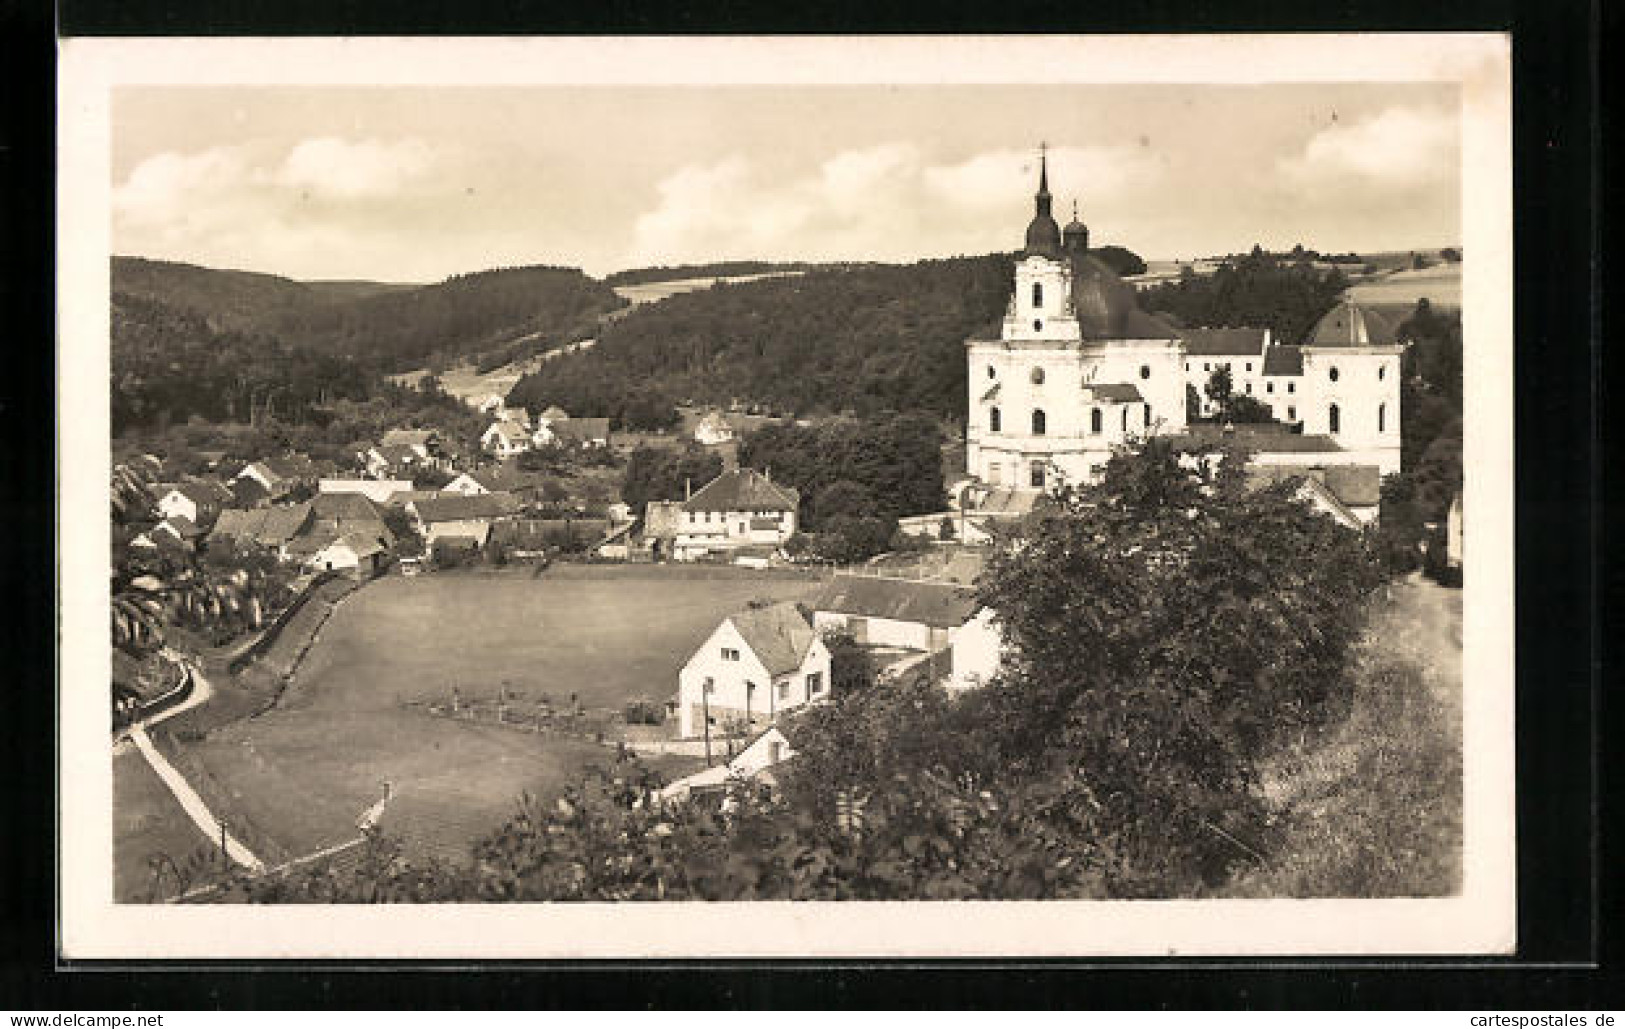 AK Krtiny, Panorama Mit Kirche  - Tschechische Republik